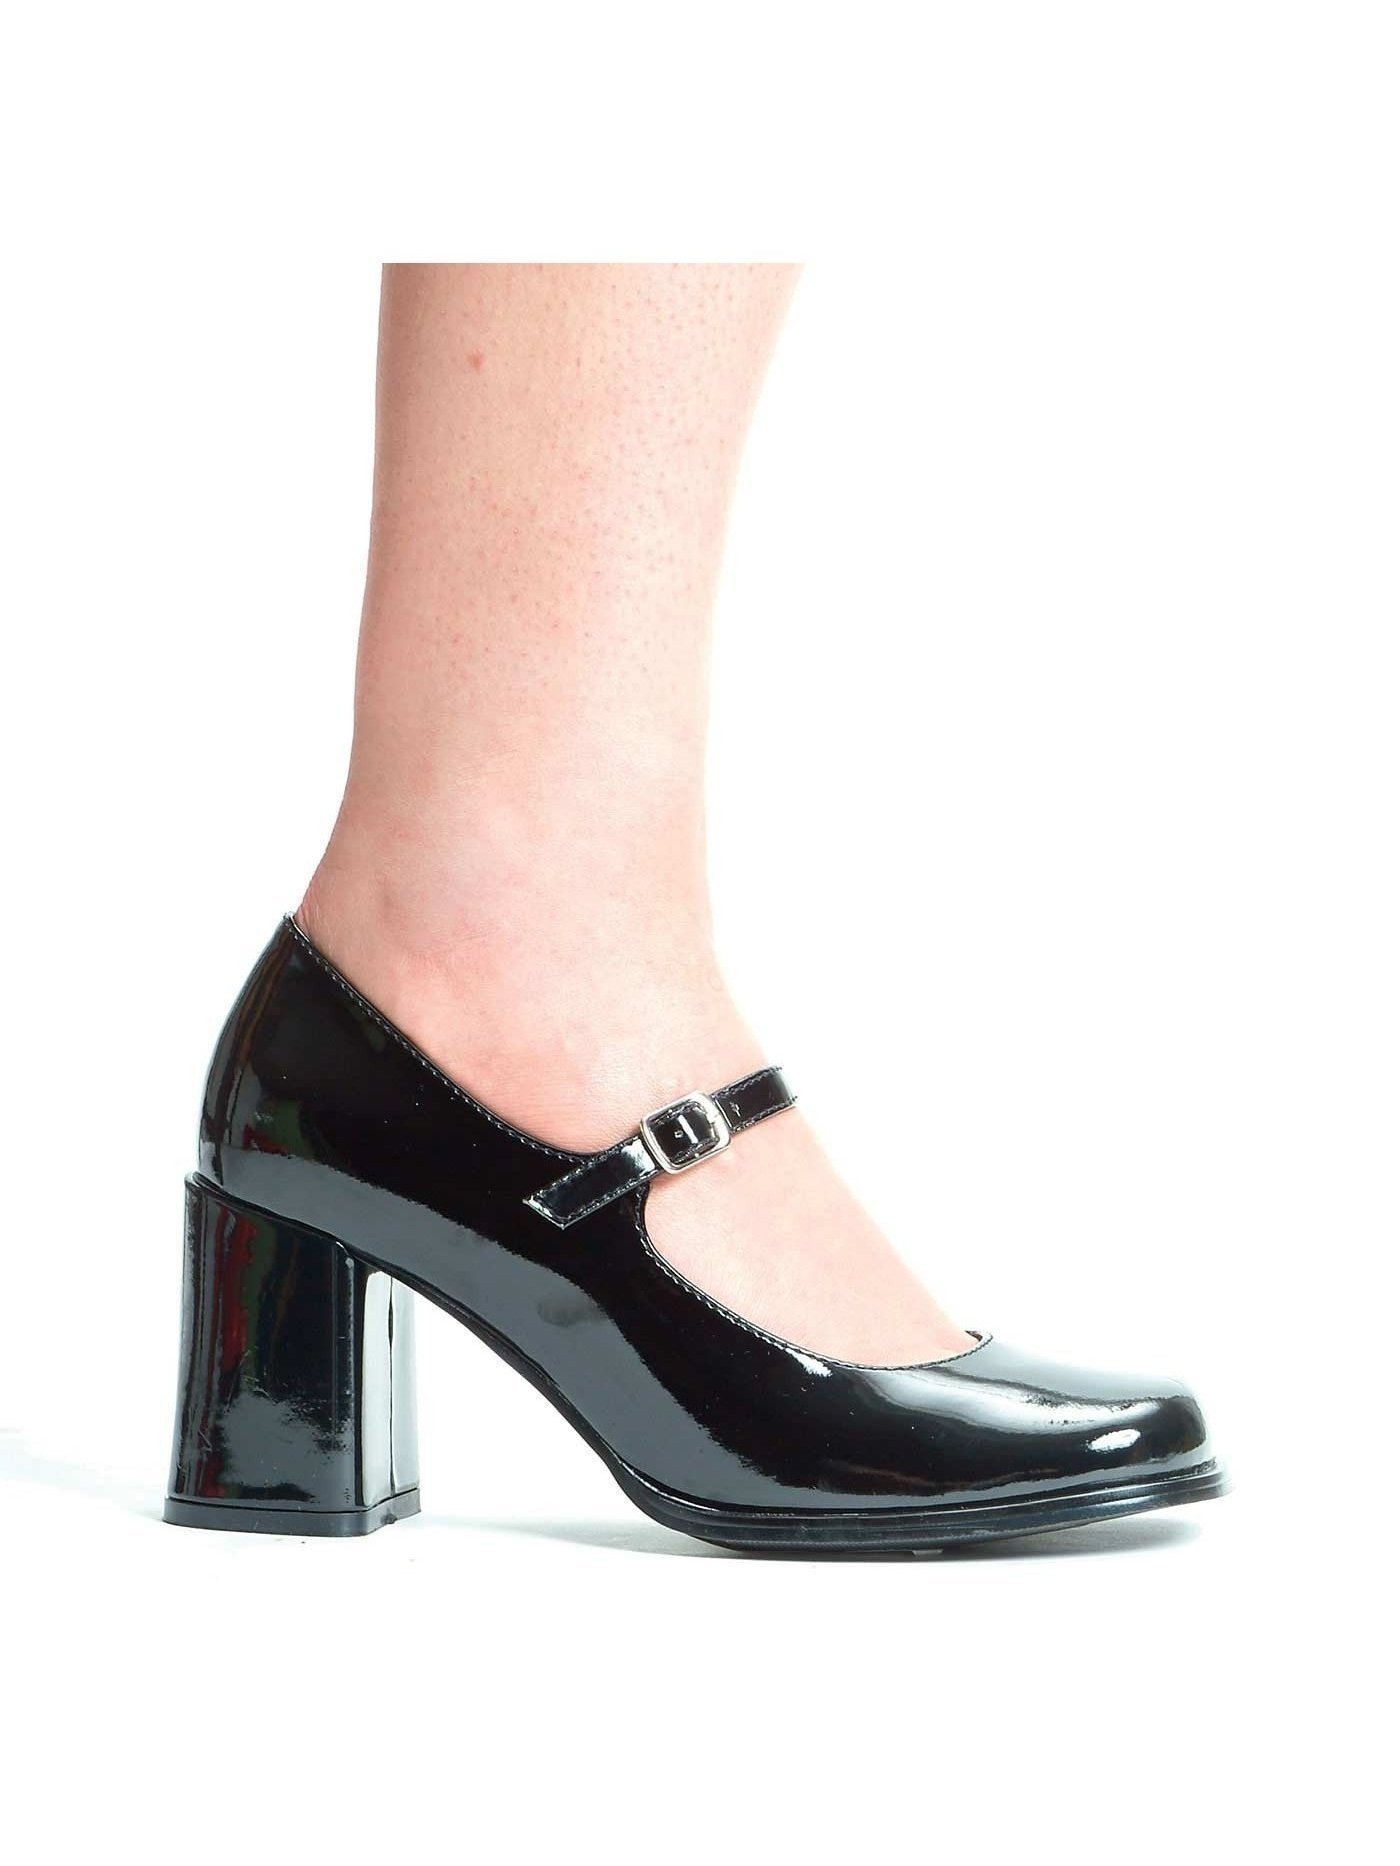 Ellie Shoes E-300-Eden 3 Heel Womens Mary Jane Shoe Black / 5 - image 1 of 6